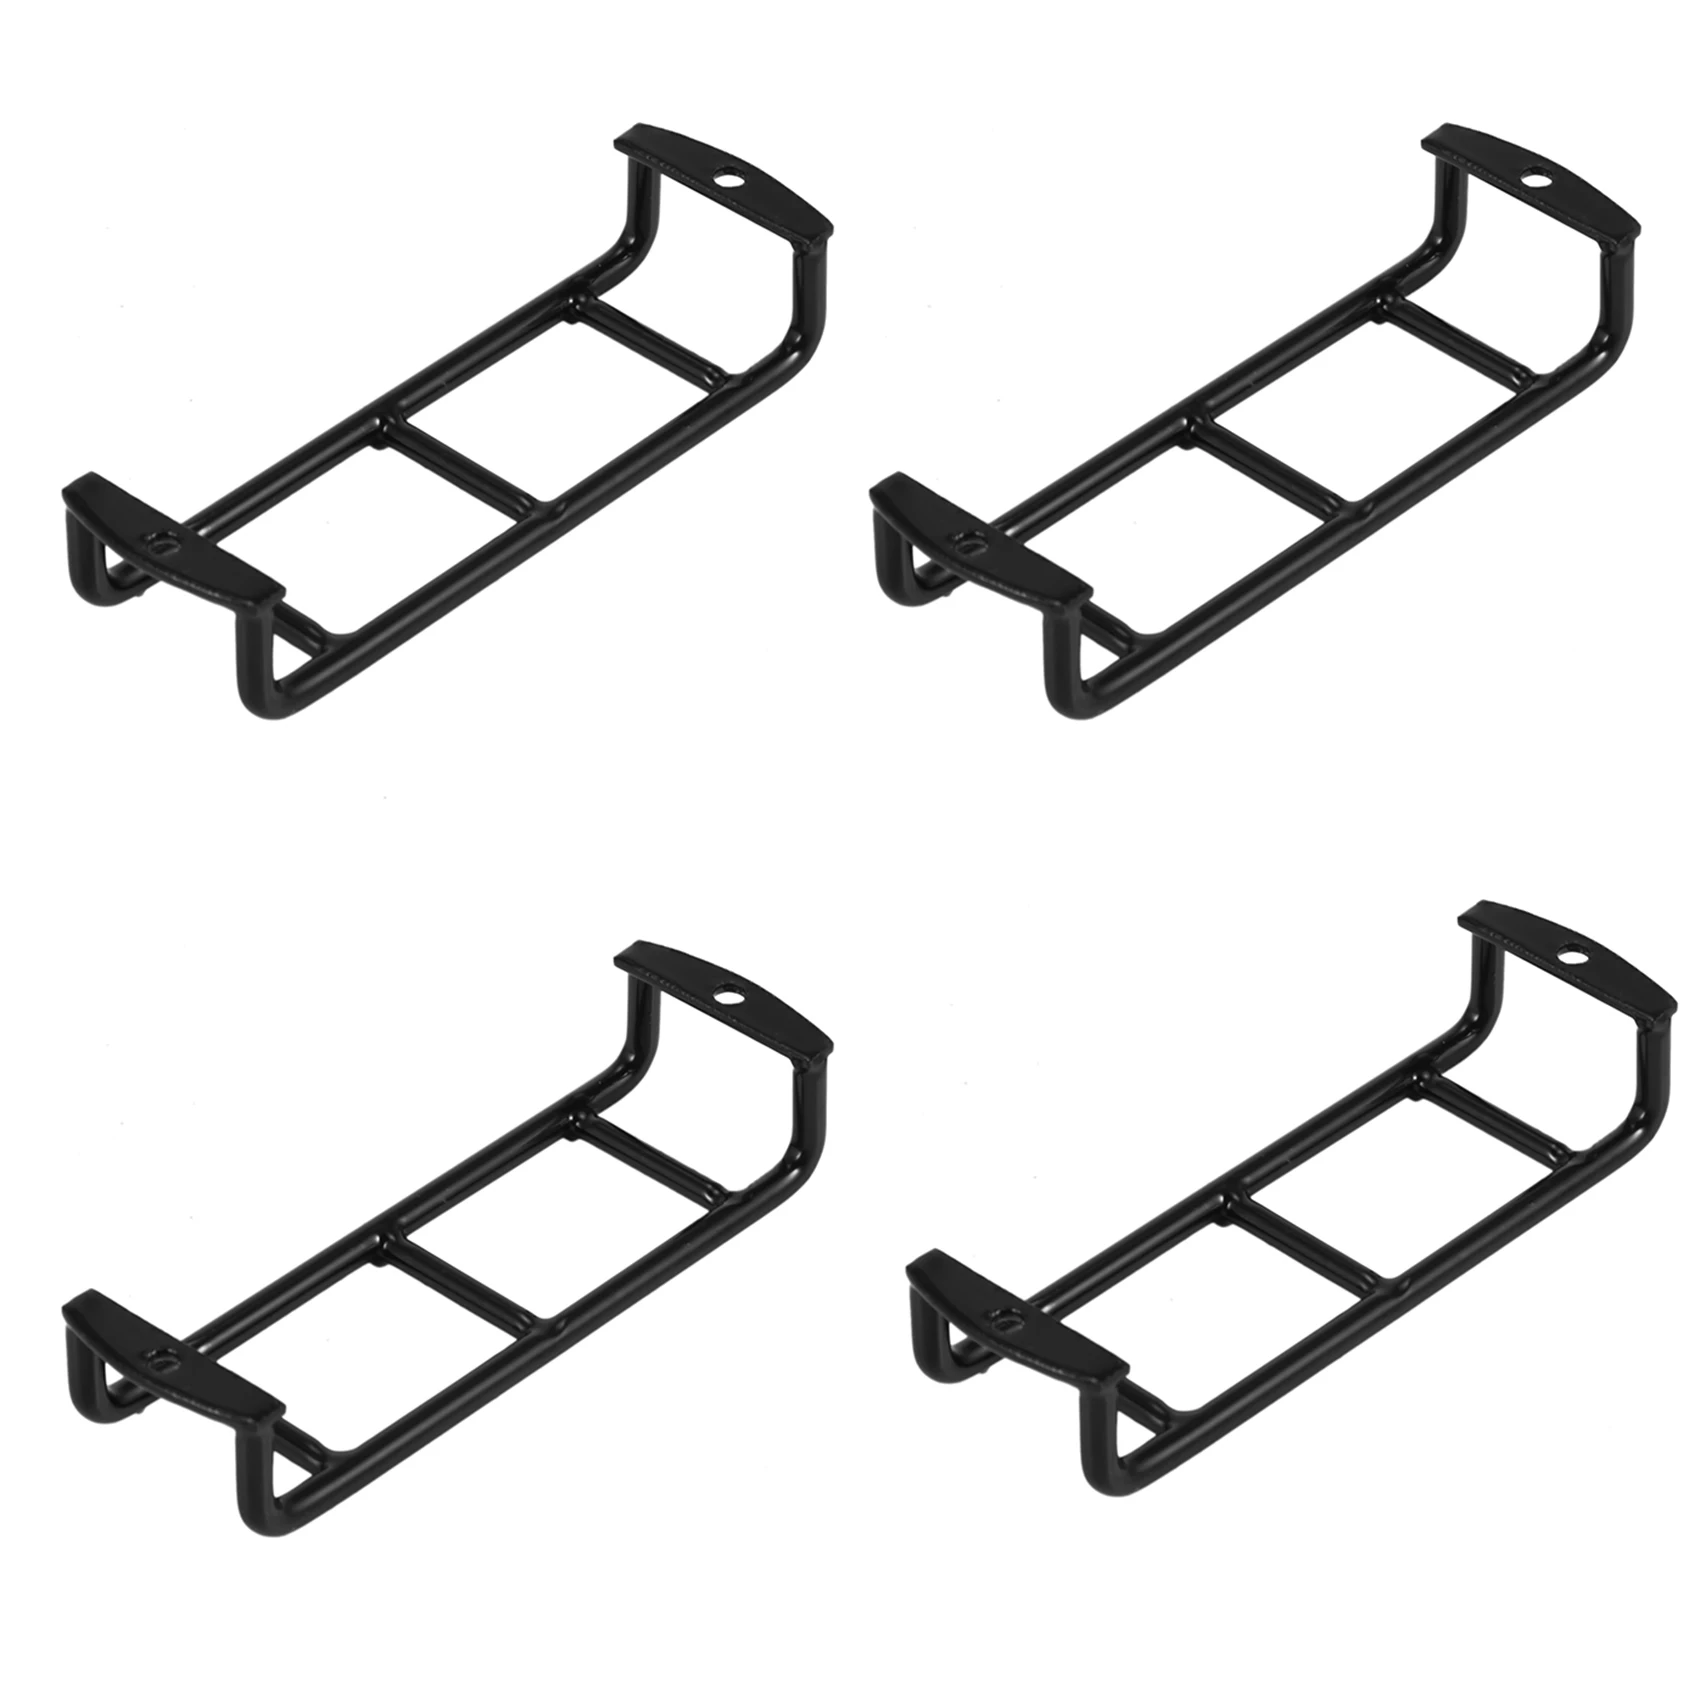 

4X Rc Car Metal Mini Ladder Stairs Accessories for Traxxas Trx4 Trx-4 Bronco Defender Body Scx10 90046 90047 D90 1/10